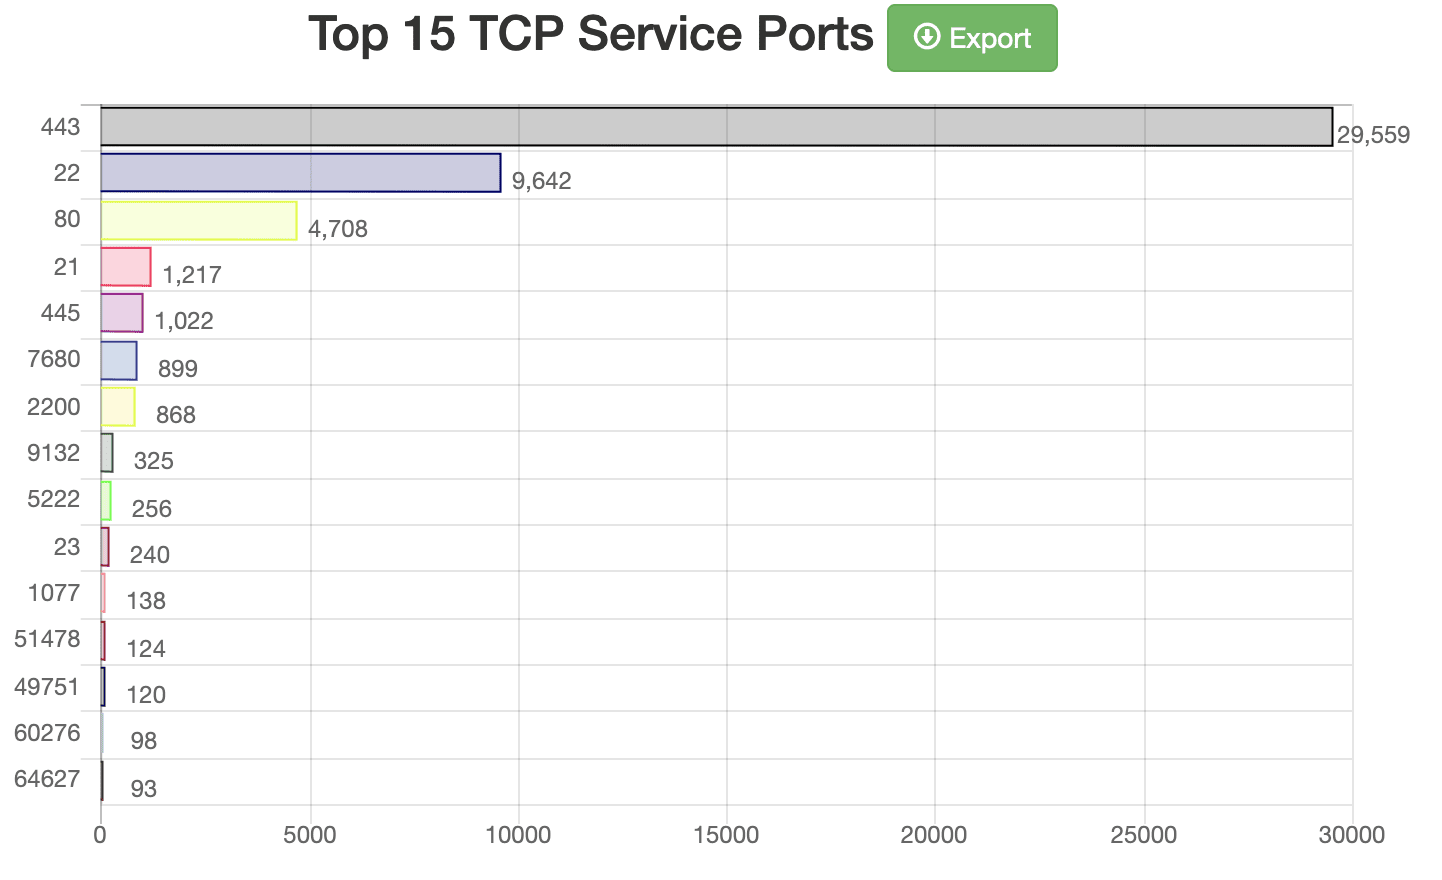 Top 15 TCP service ports